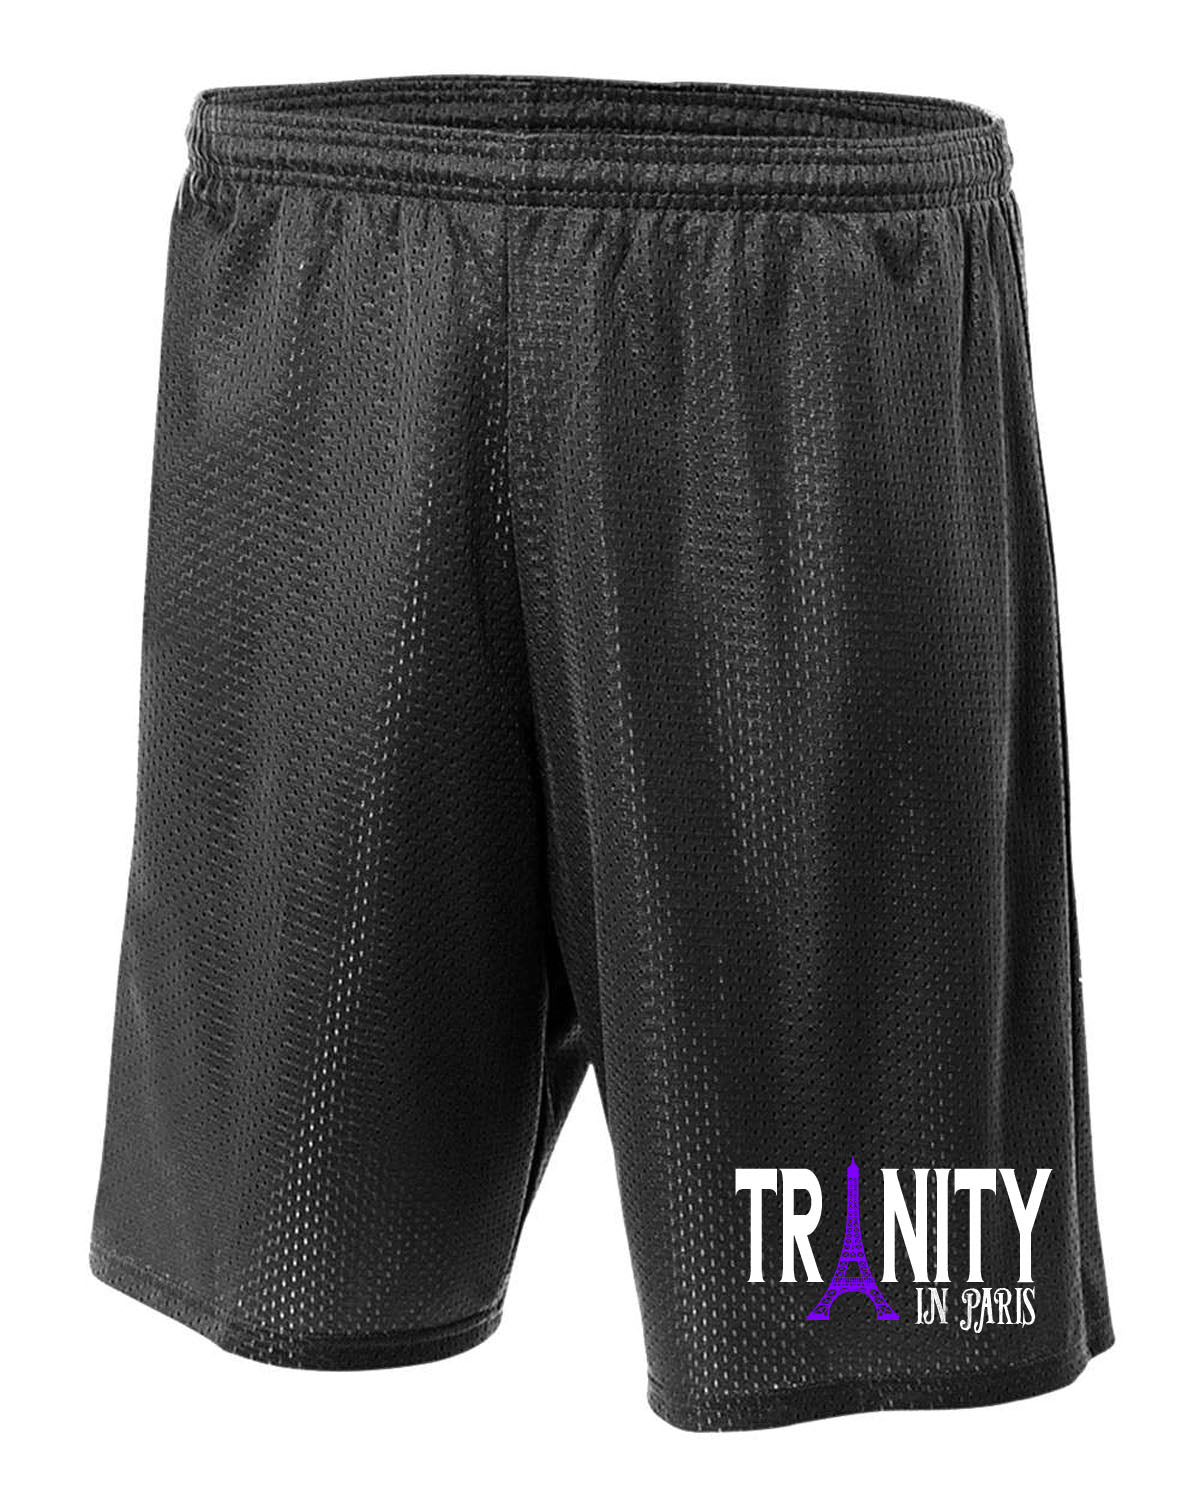 Trinity in Paris Mesh Shorts